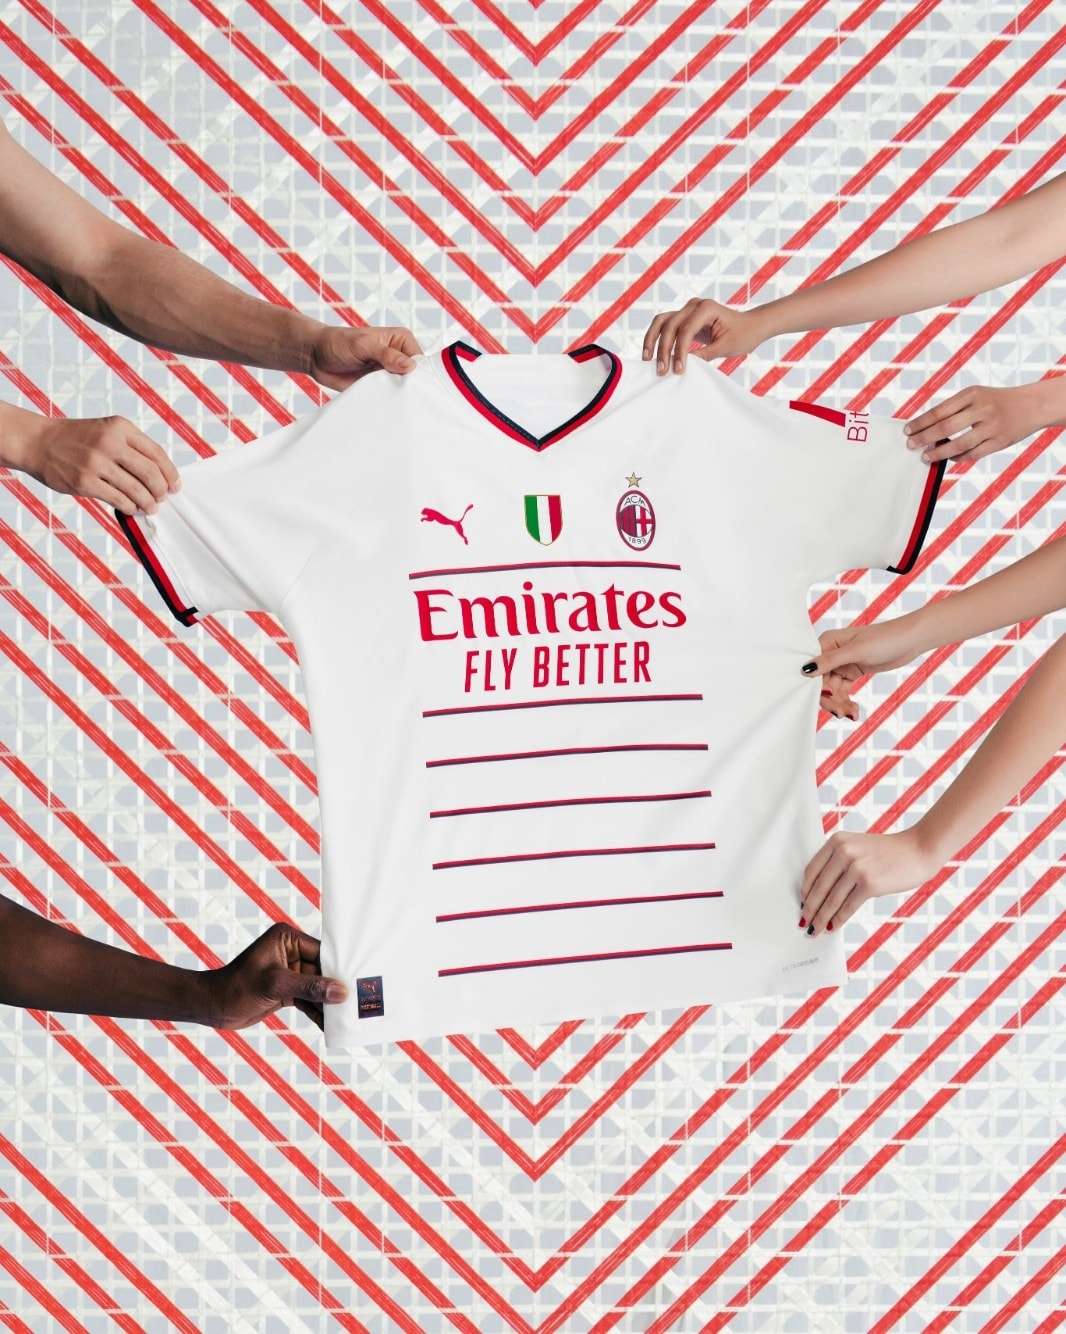 AC Milan Launch Their Away Shirt For The 2021/22 Season - The AC